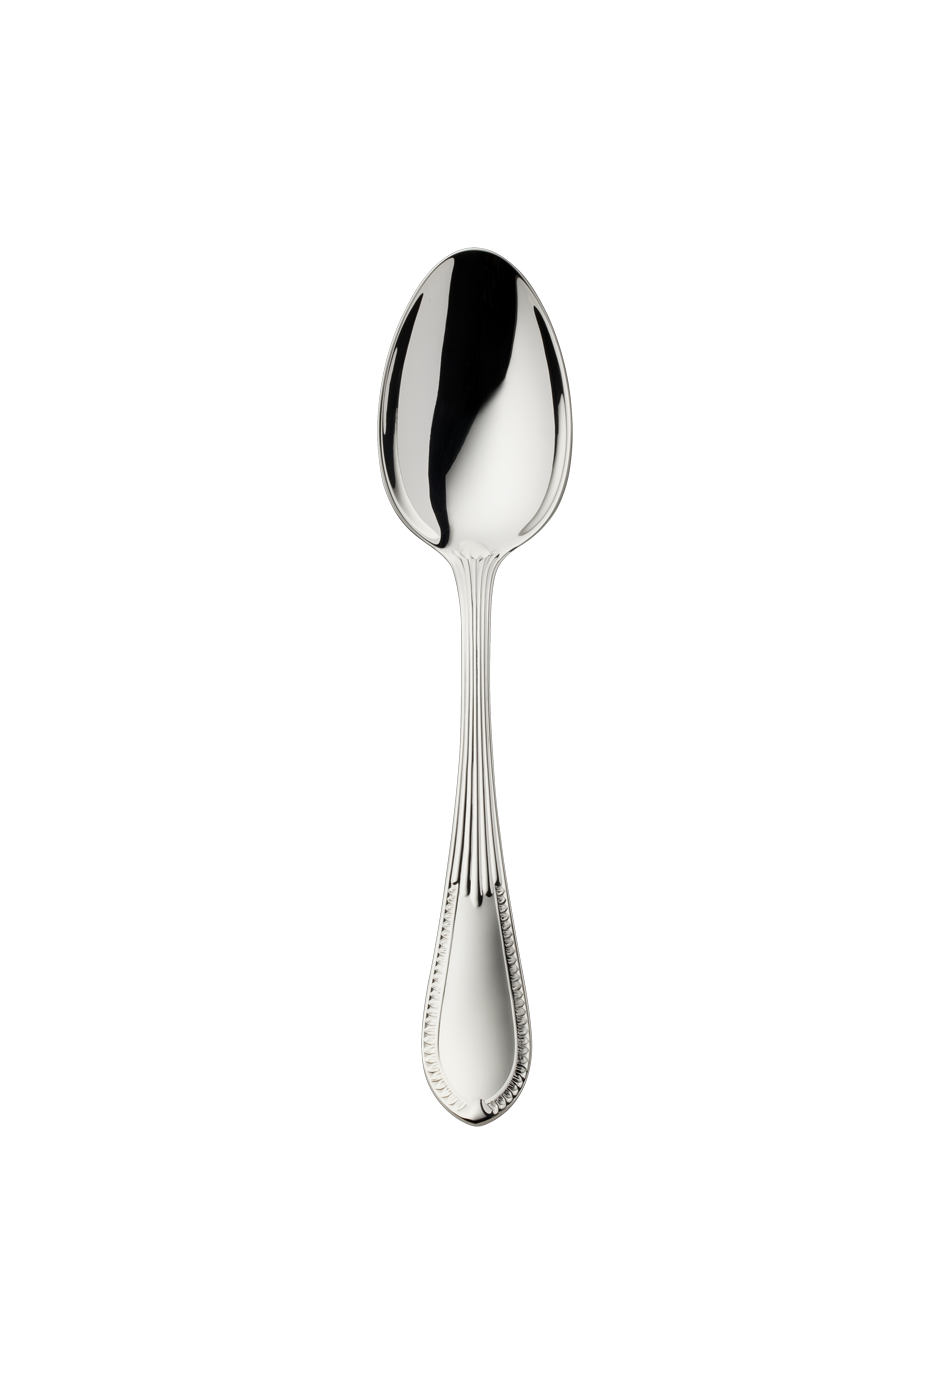 Belvedere Dessert Spoon (150g massive silverplated)